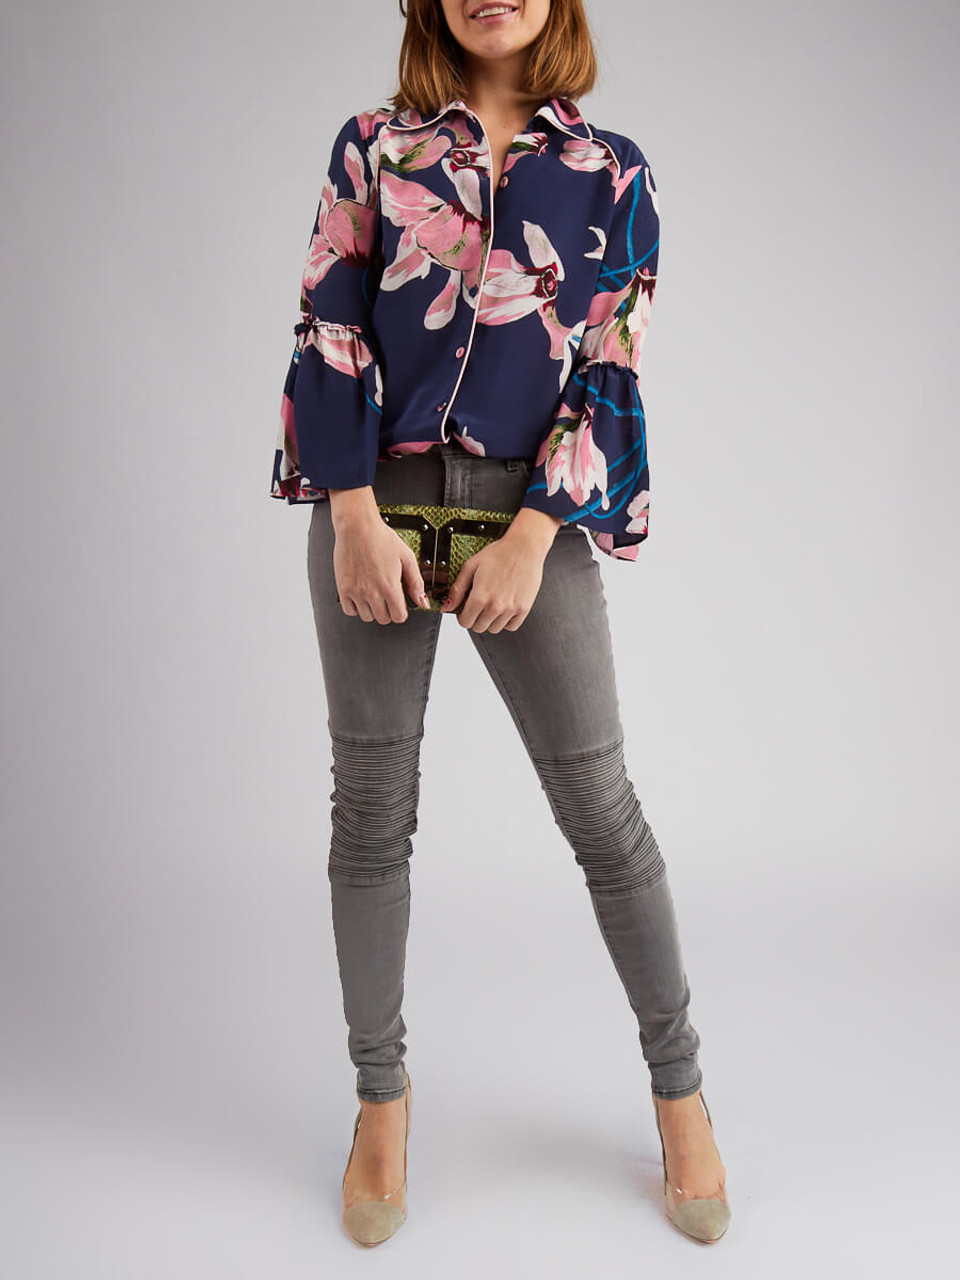 Women Erdem Multicolour Silk Floral Shirt - Size S UK8 US4 FR36